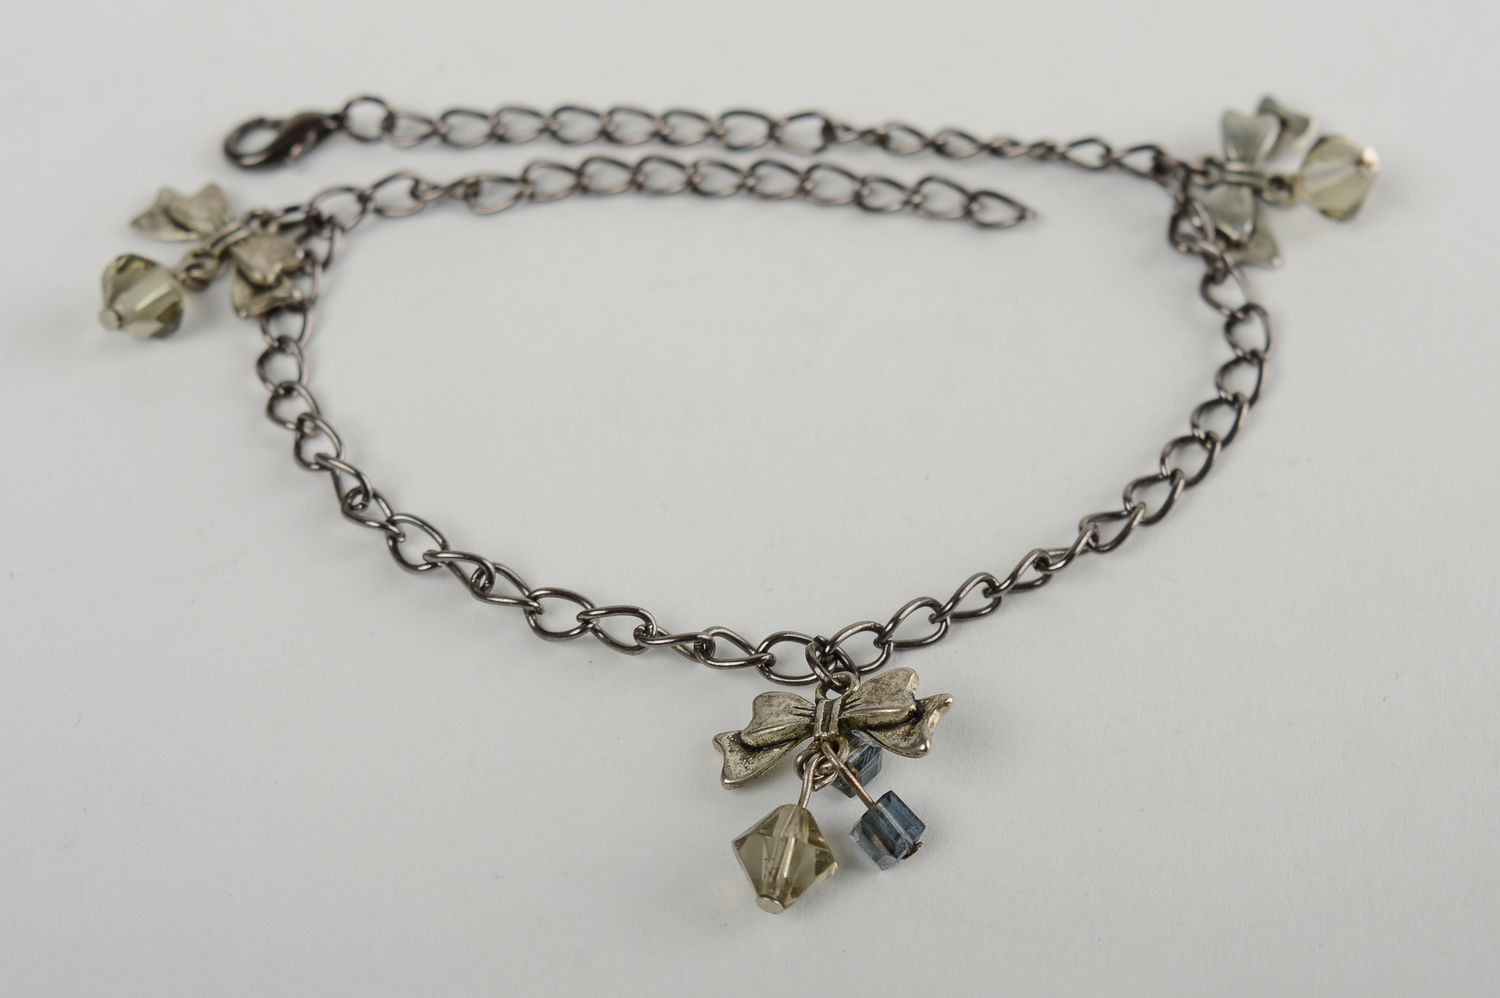 Unusual handmade metal bracelet chain bracelet with charms fashion trends photo 4